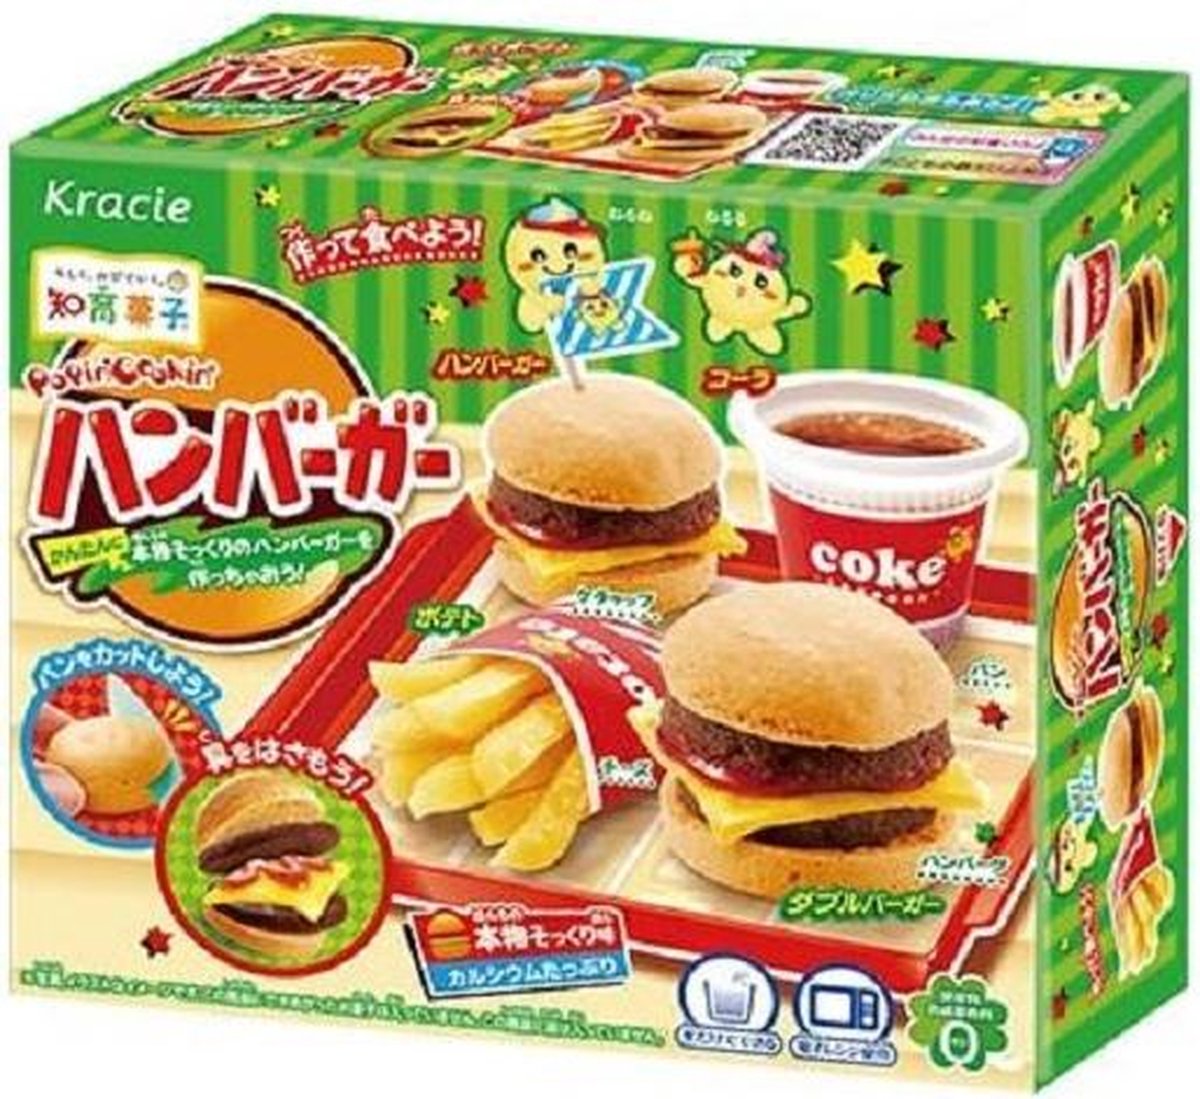 Popin' Cookin' Japanese Festival DIY Candy,50 grams (1 Box)